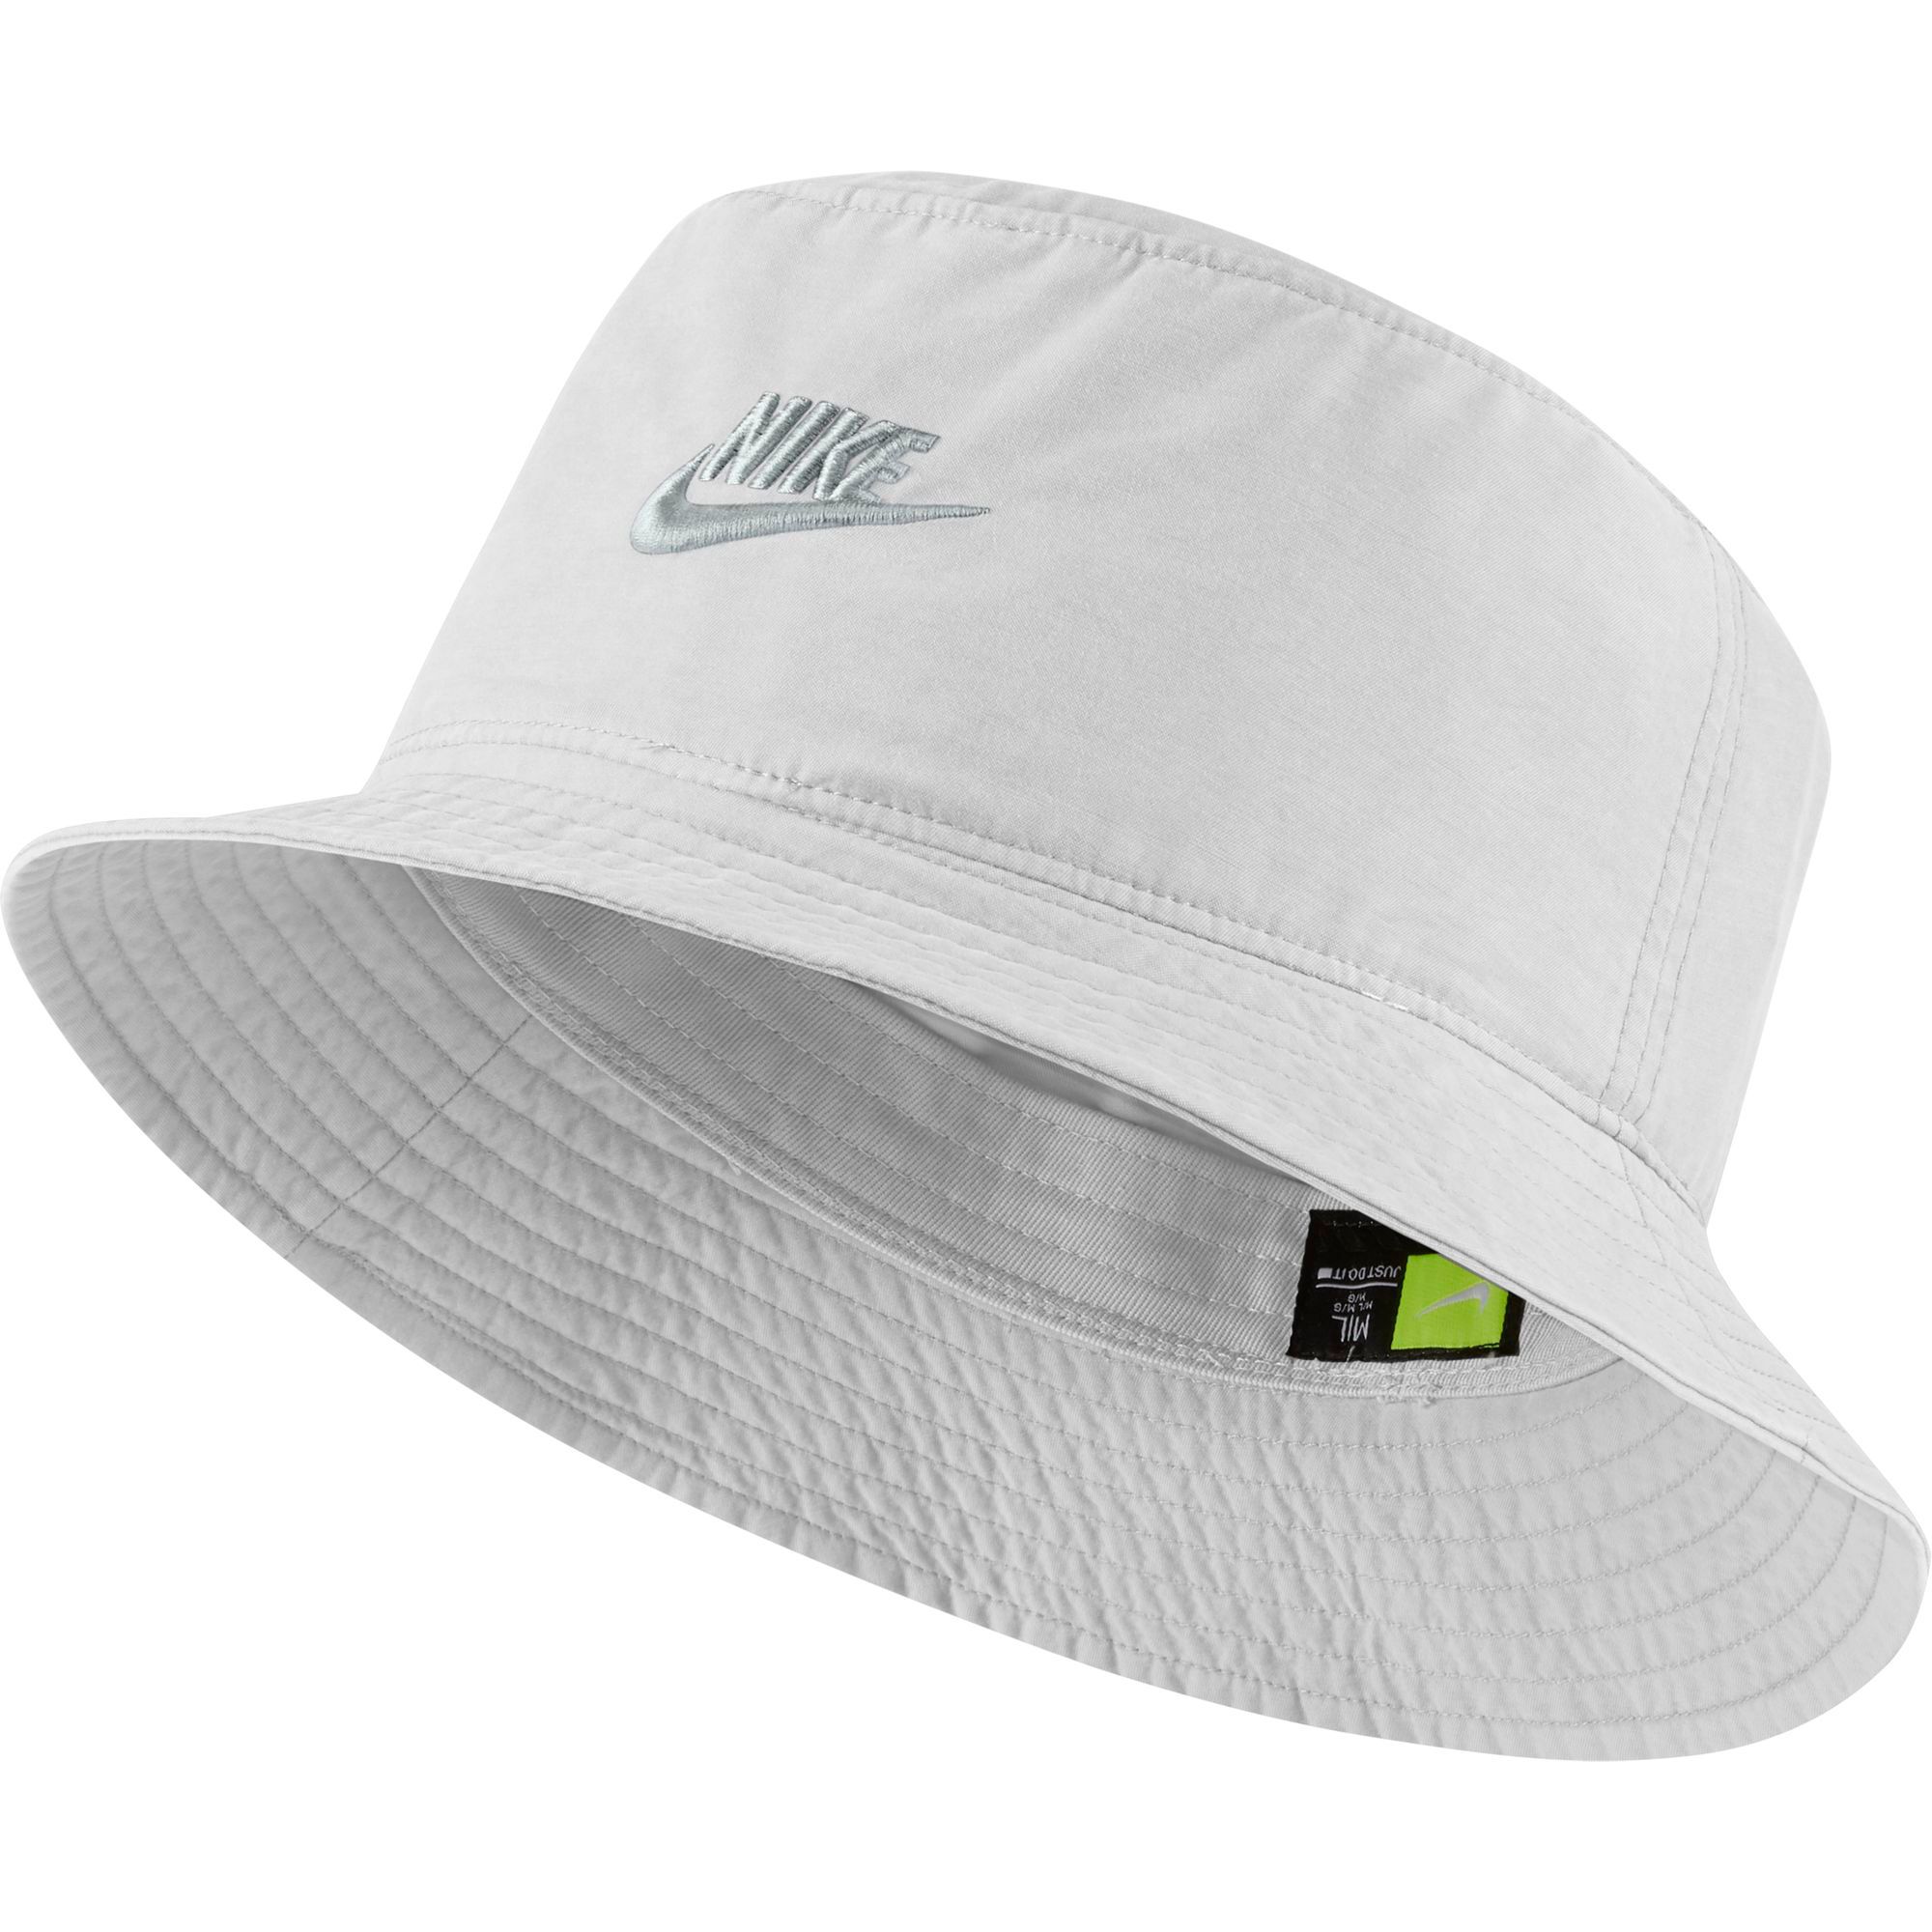 all white nike hat